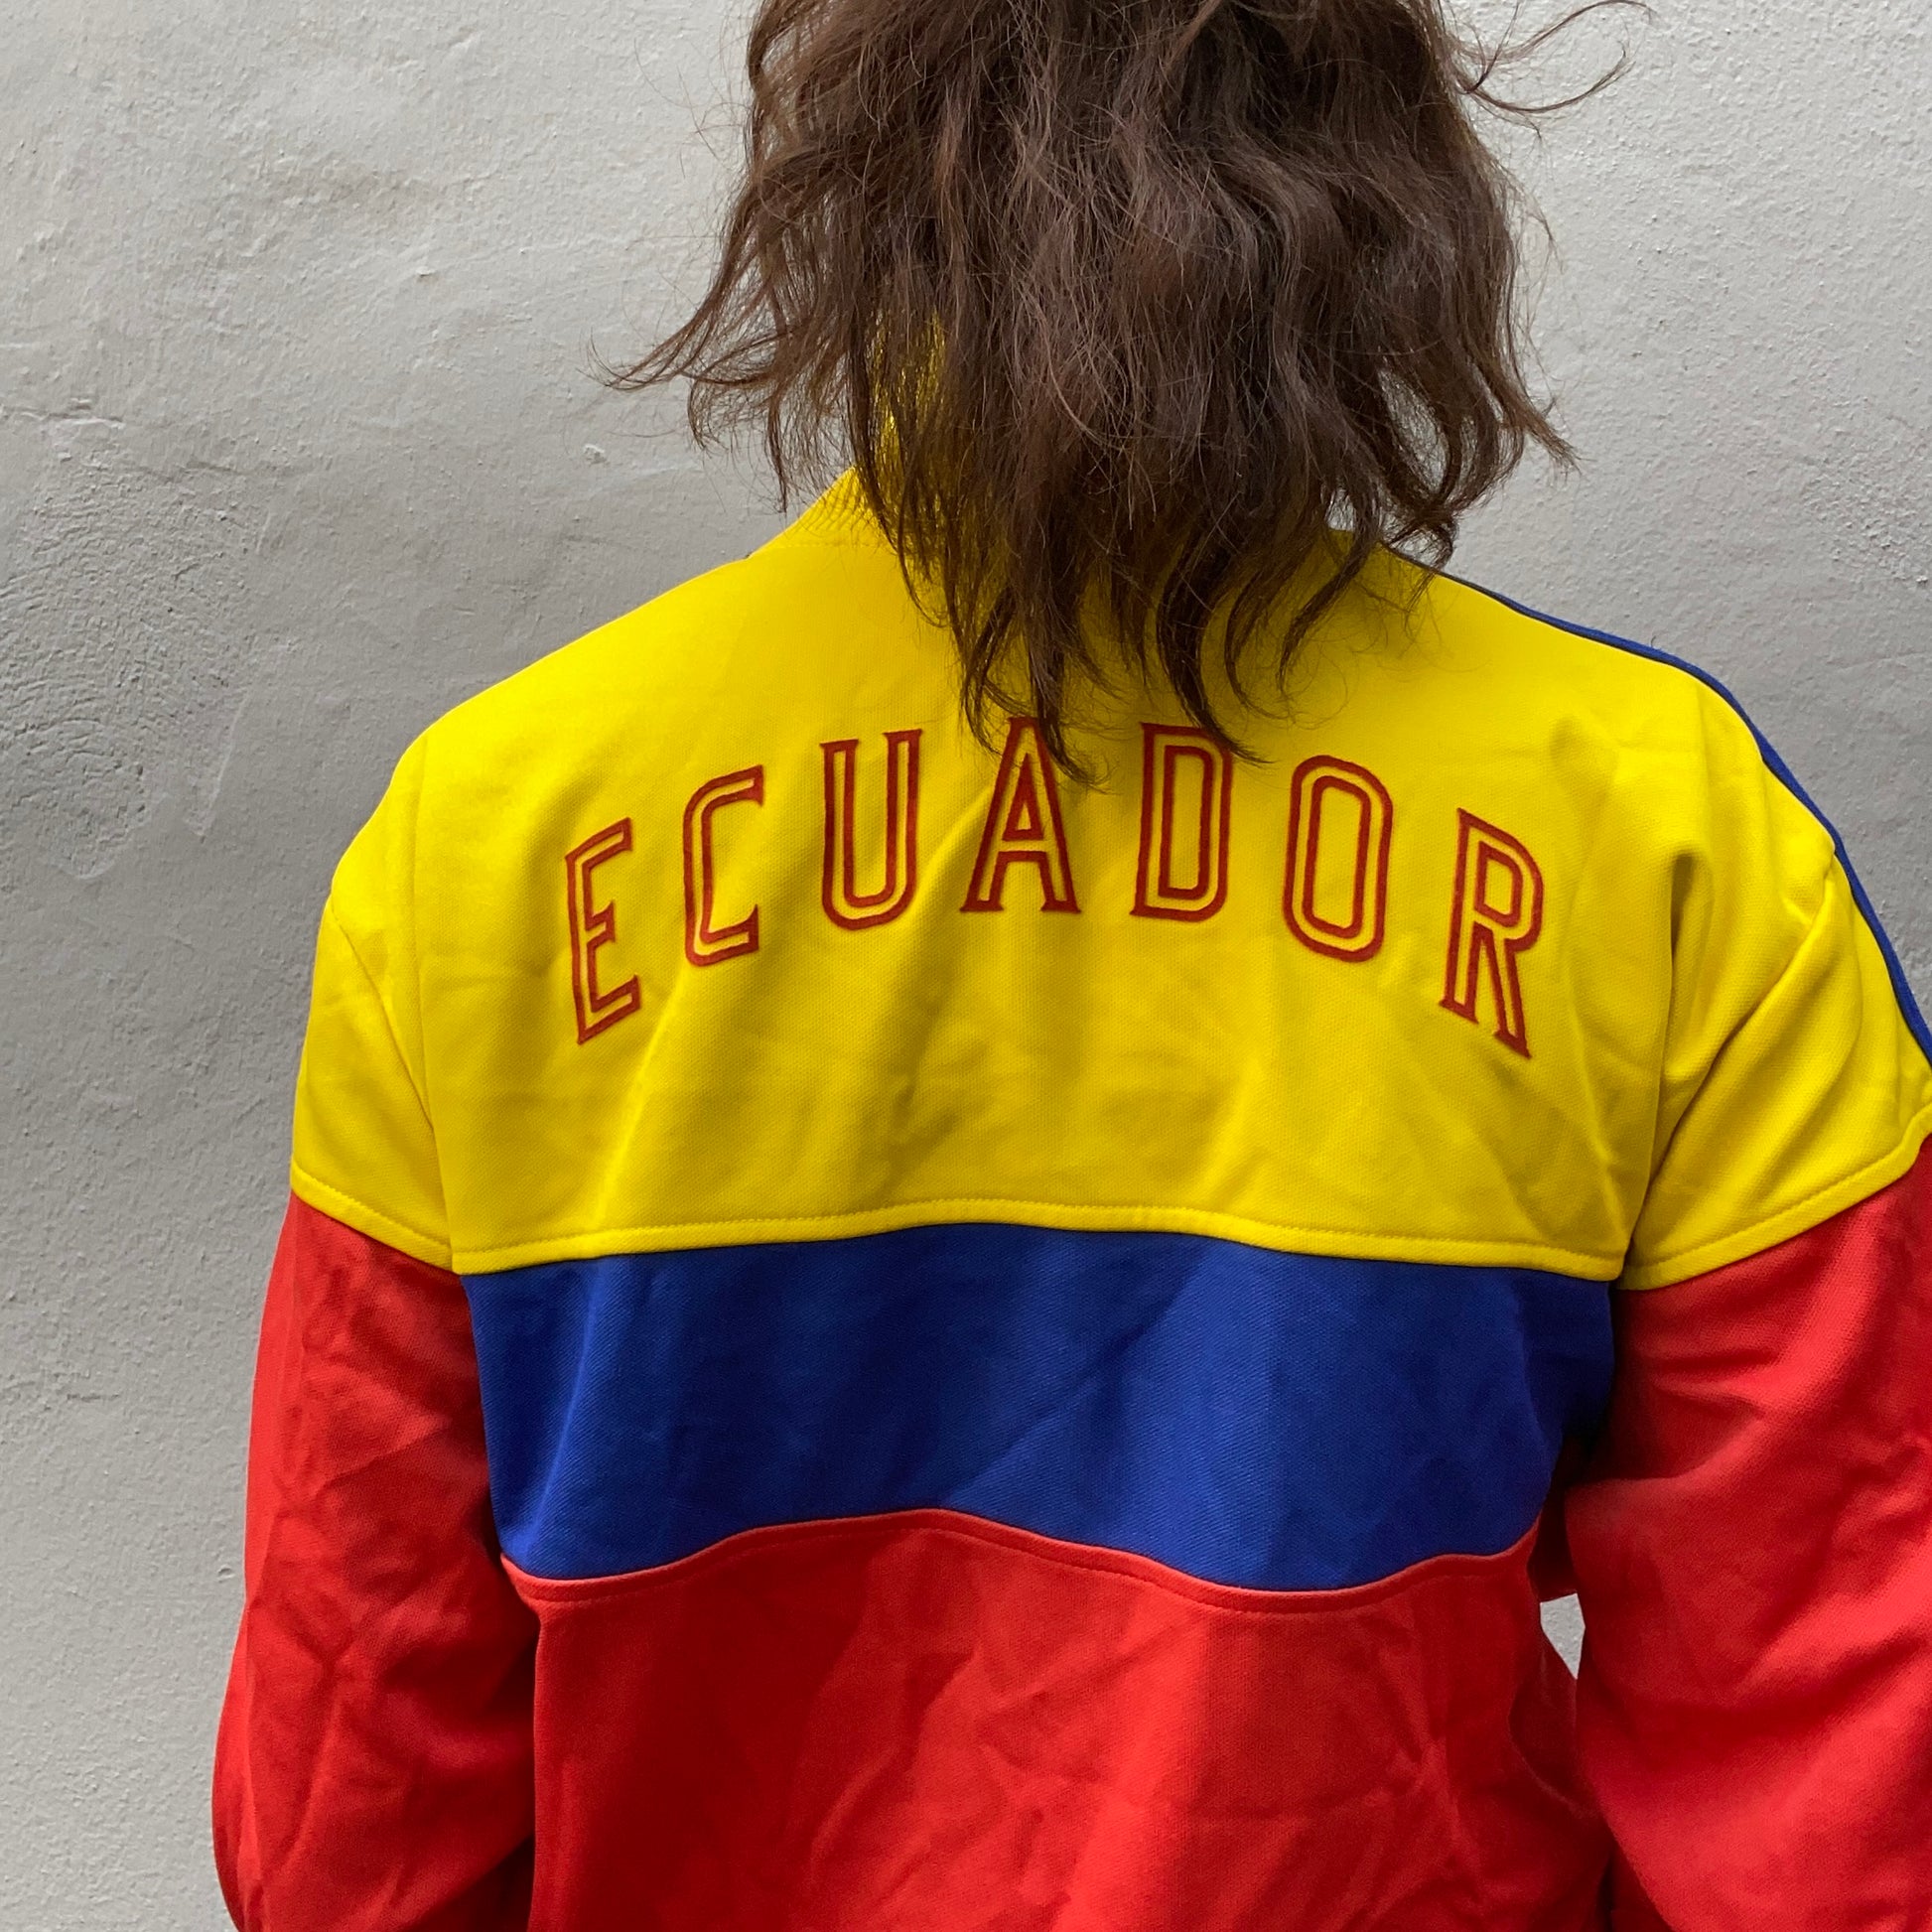 Ecuador Adidas Track Suit back